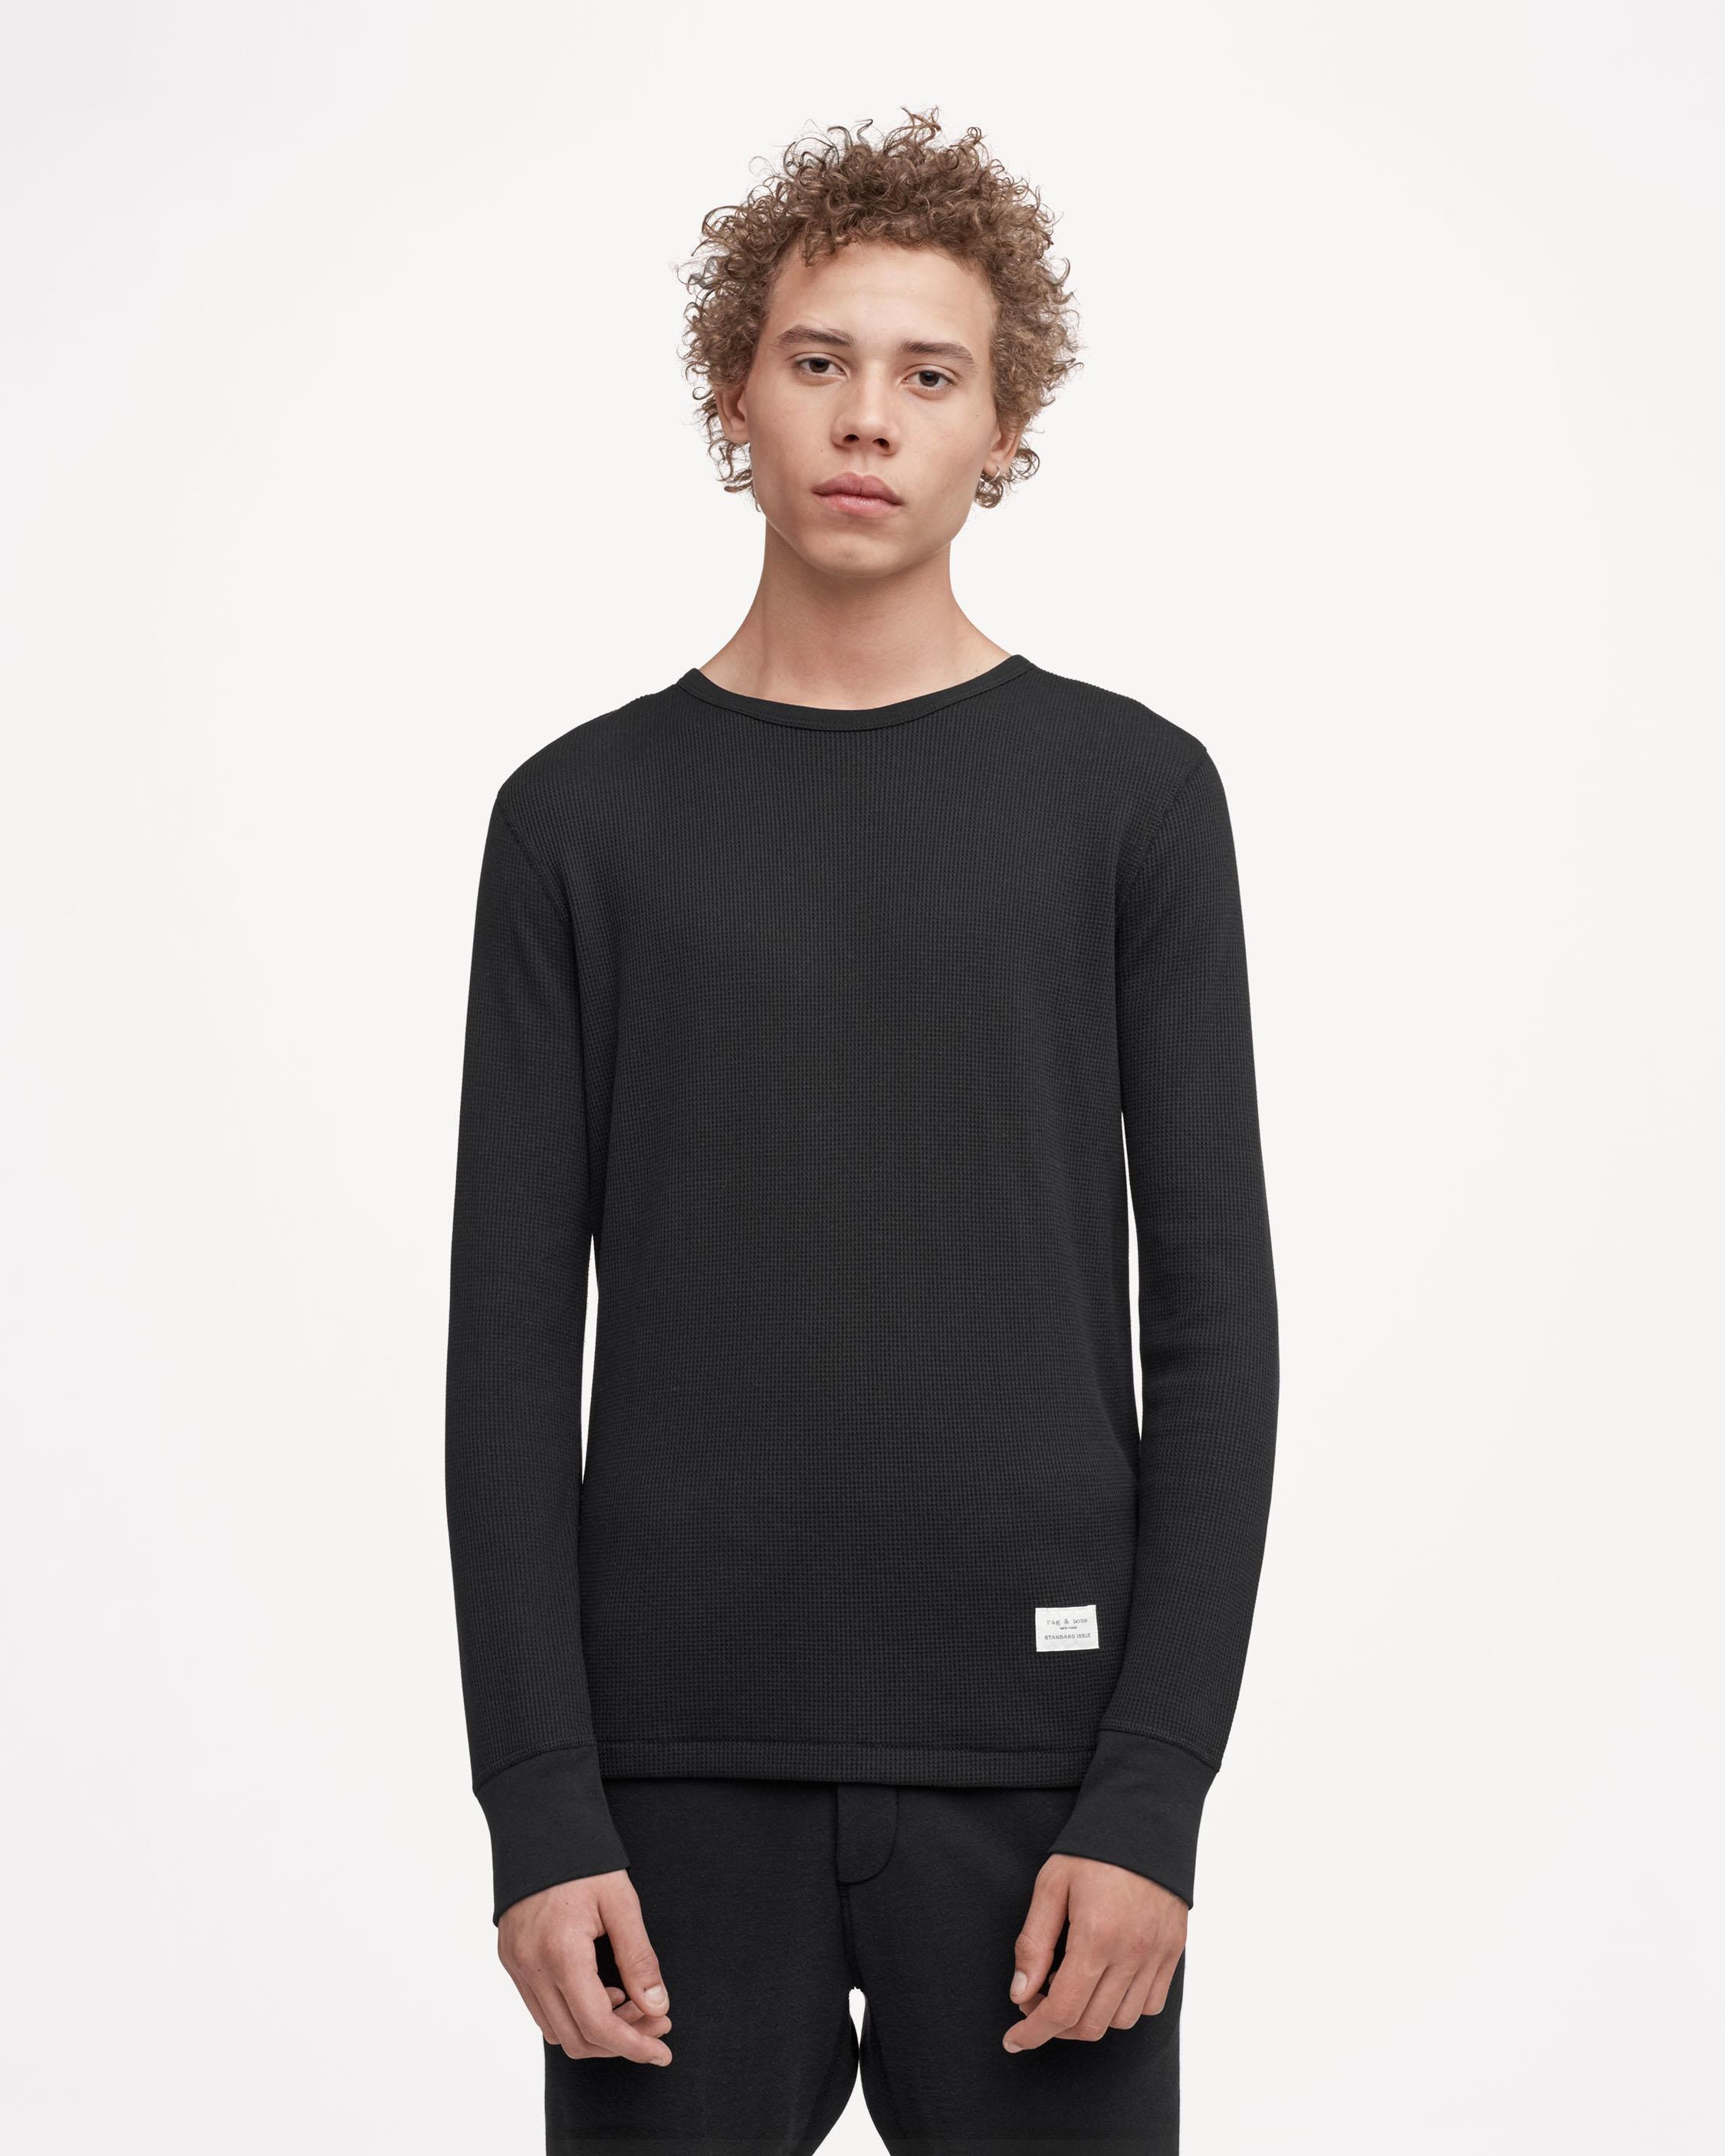 Men's Shirts, Tops & Sweaters with an Urban Edge | rag & bone